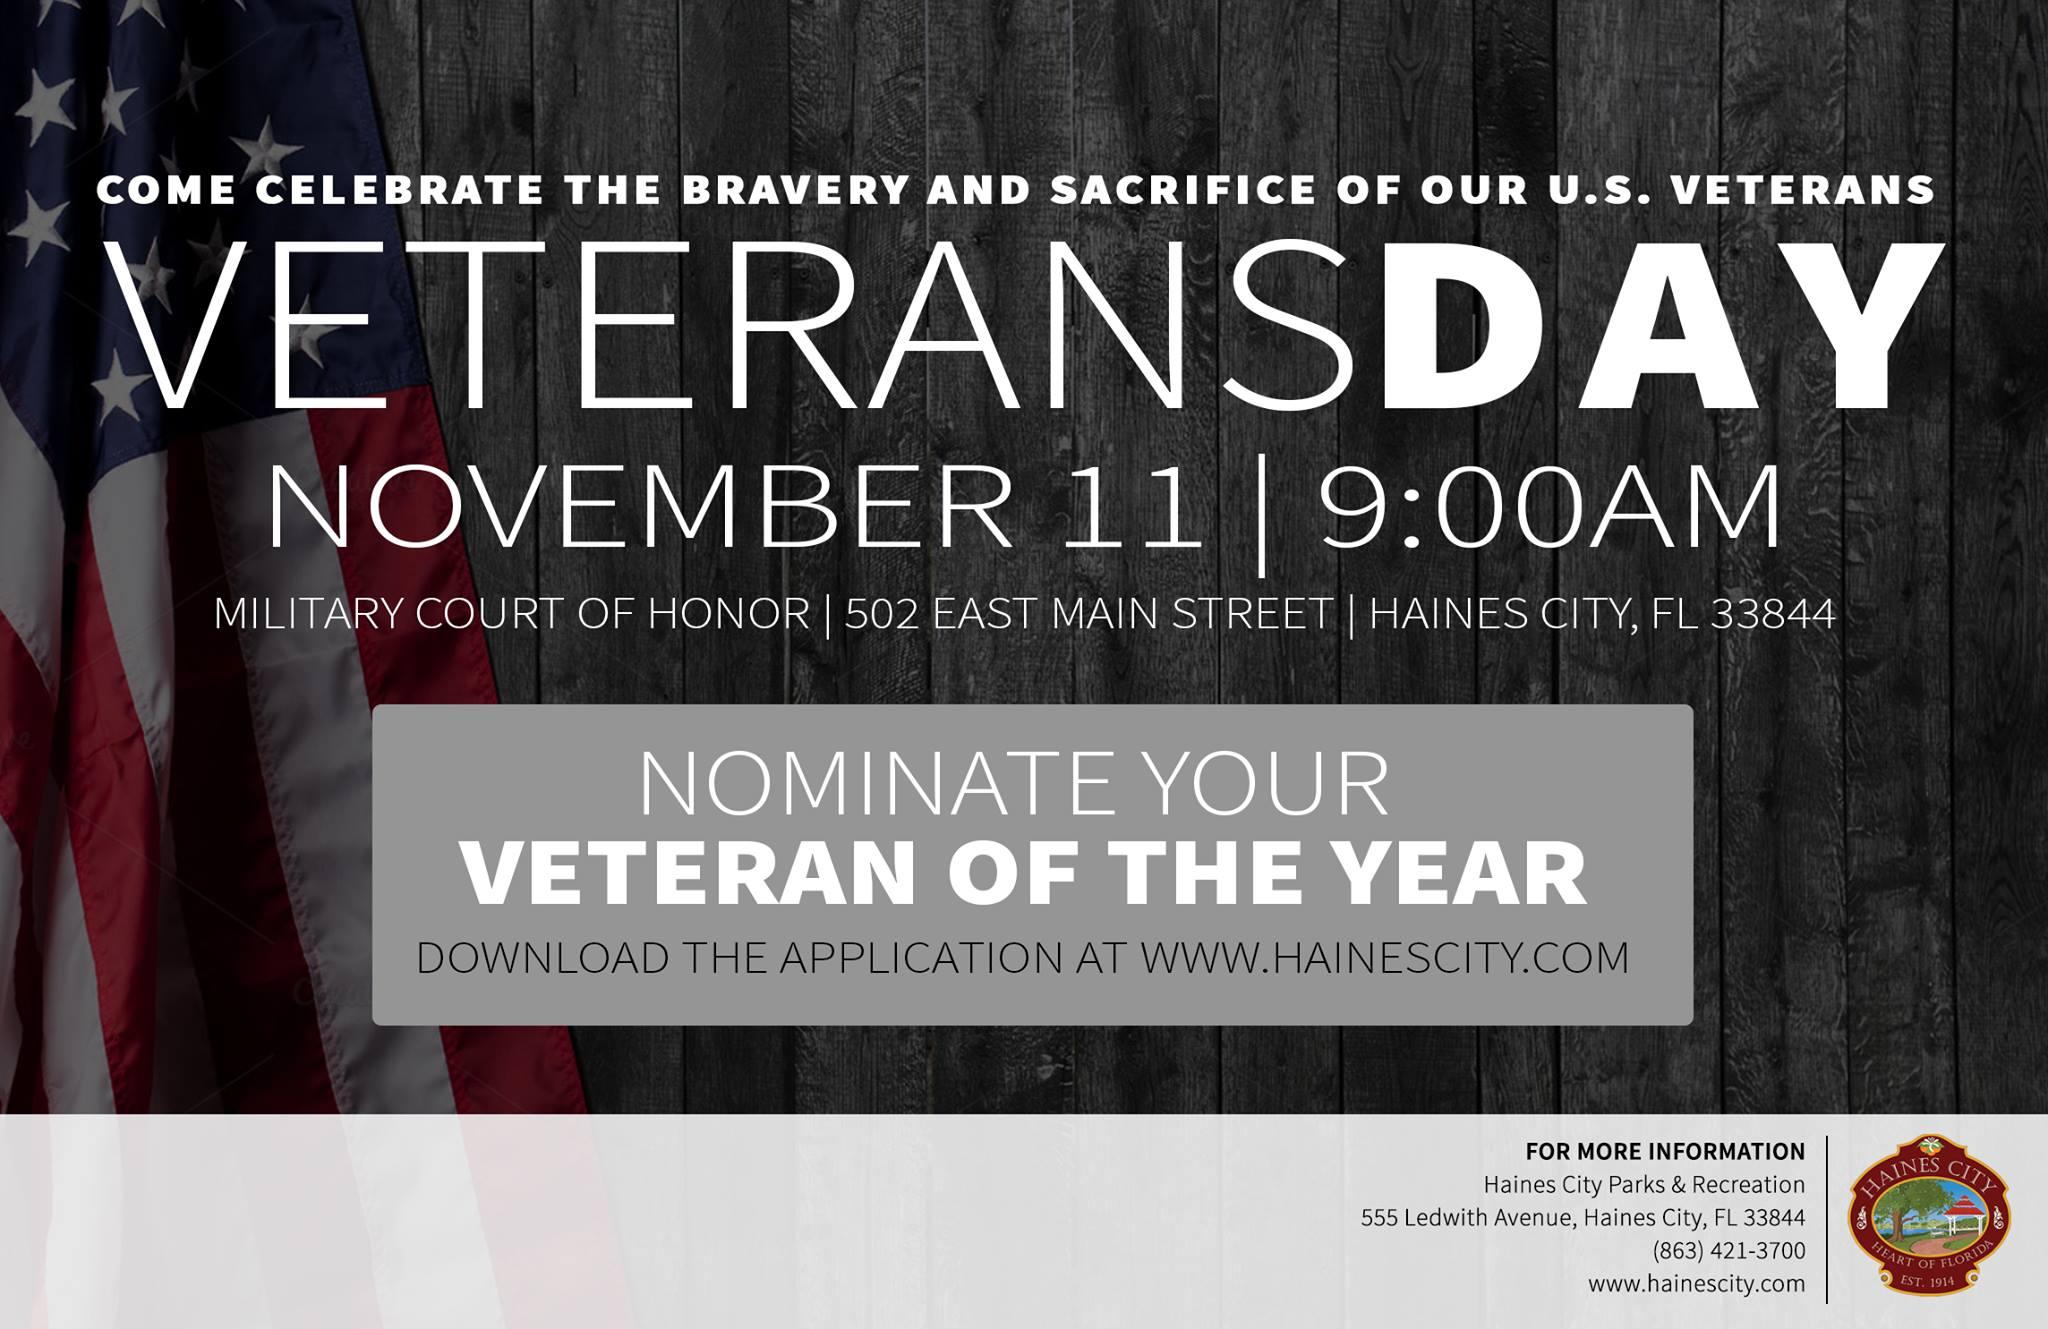 Veterans Day in Haines City, FL
Fri Nov 11, 12:00 AM - Sat Nov 12, 12:00 AM
in 21 days